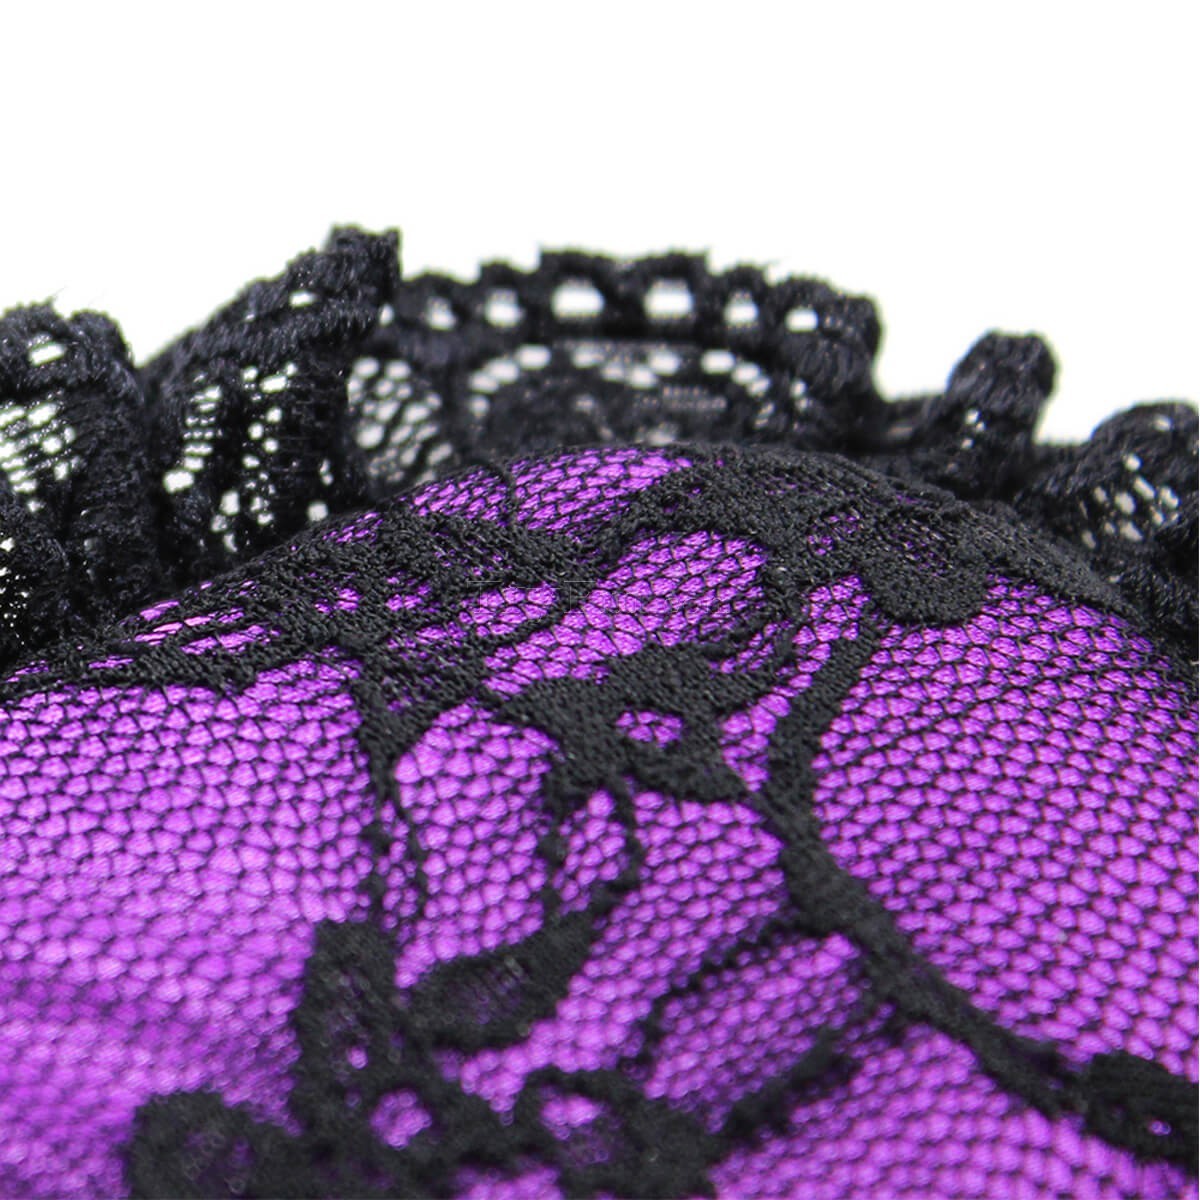 2-lace-blindfold-handcuffs-set-purple6.jpg